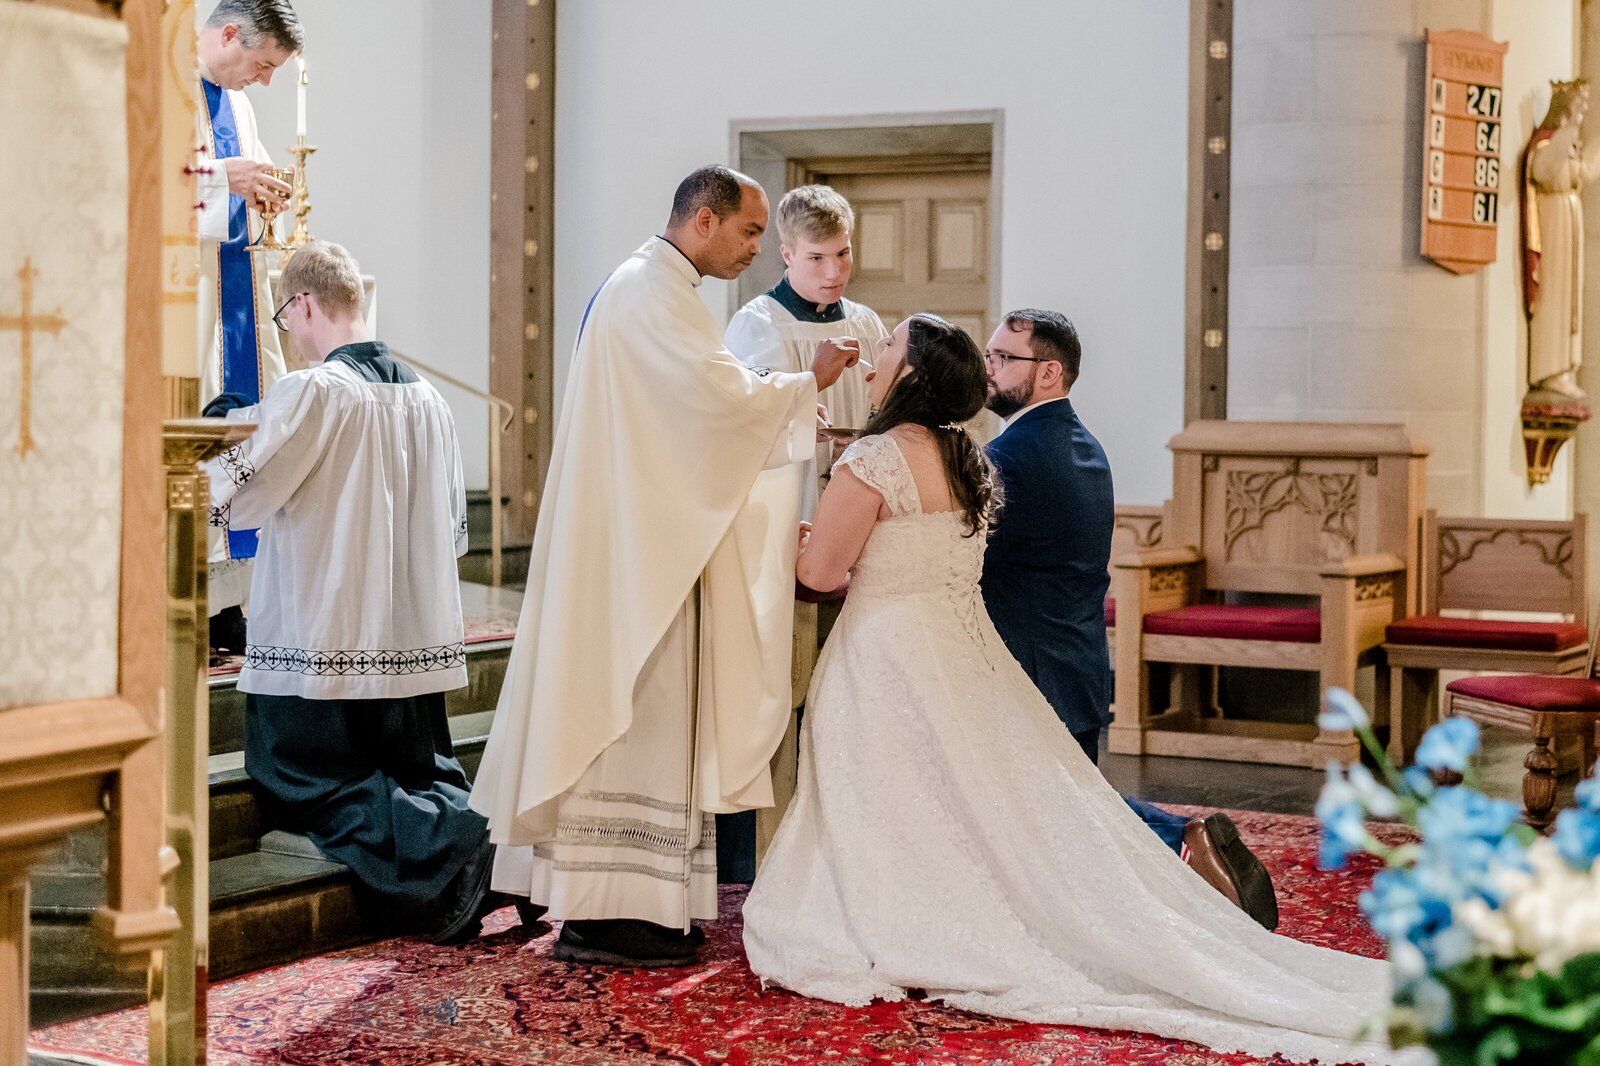 A bride receiving communion during her wedding at St. Rita Catholic Church in Alexandria Virginia